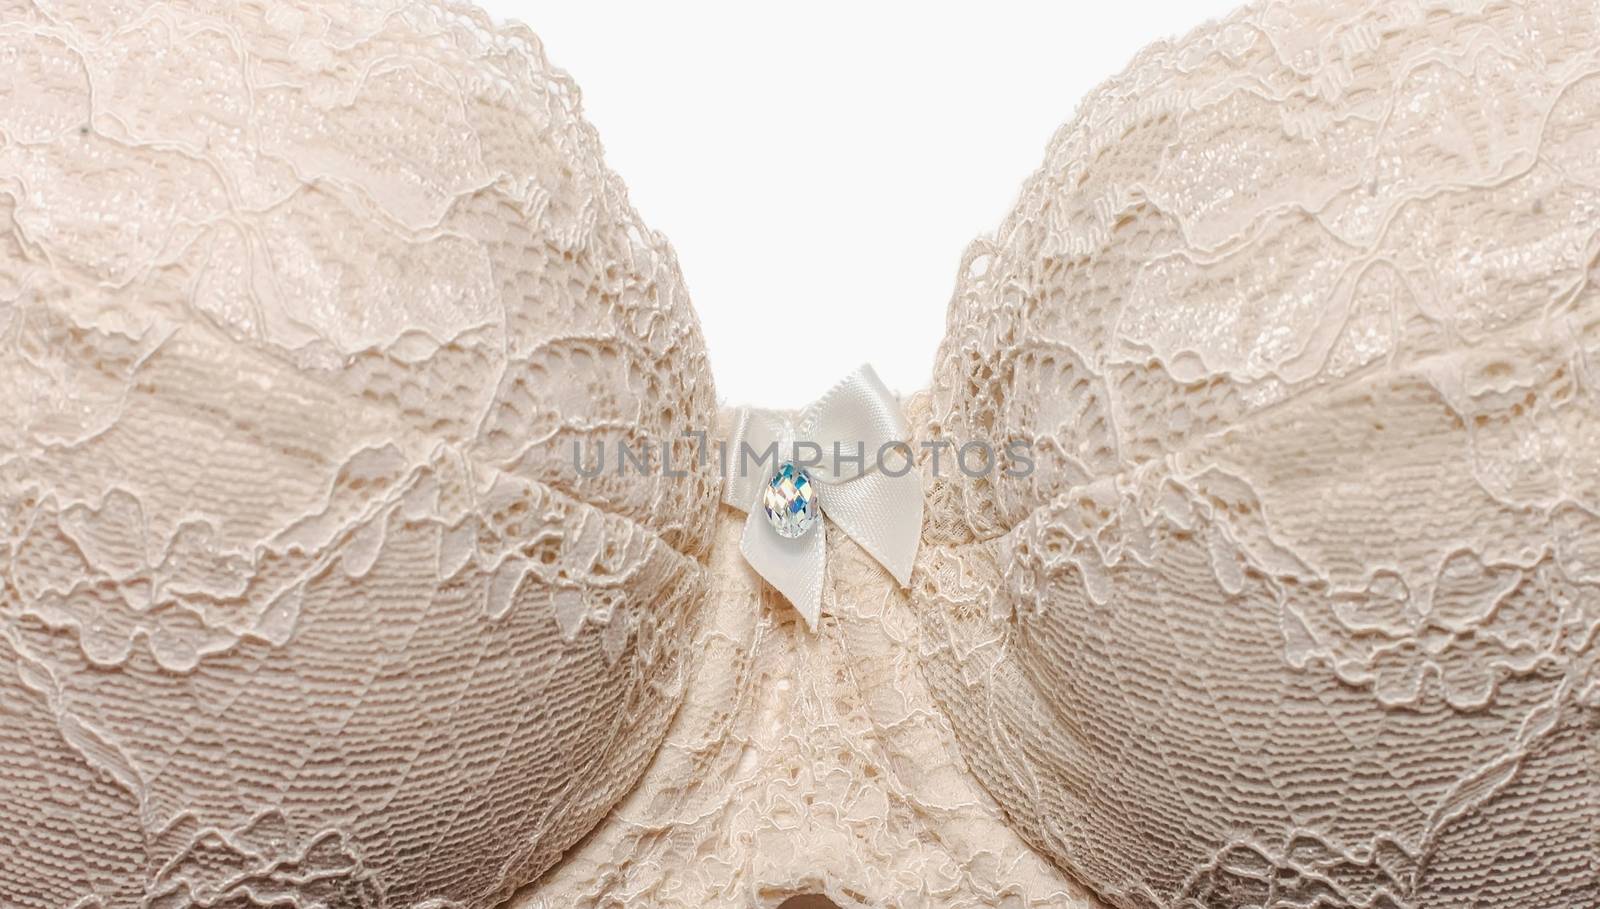 lace bra light color on a white background, fashionable lingerie for the bride,lace bra light color on a white background, fashionable lingerie for brides, soft focus